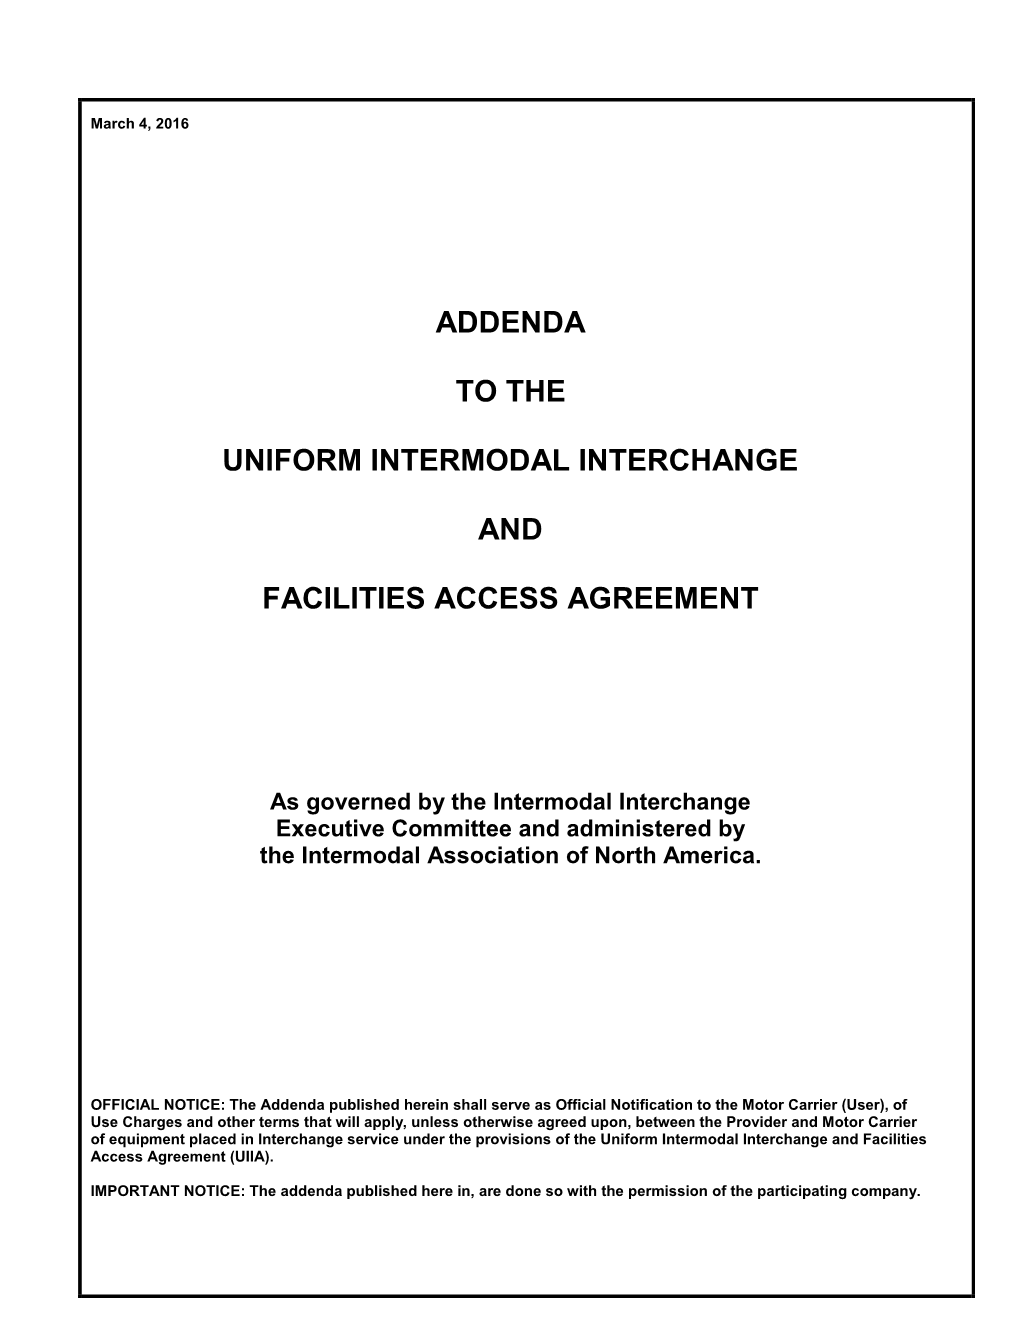 Addenda to the Uniform Intermodal Interchange and Facilities Access Agreement